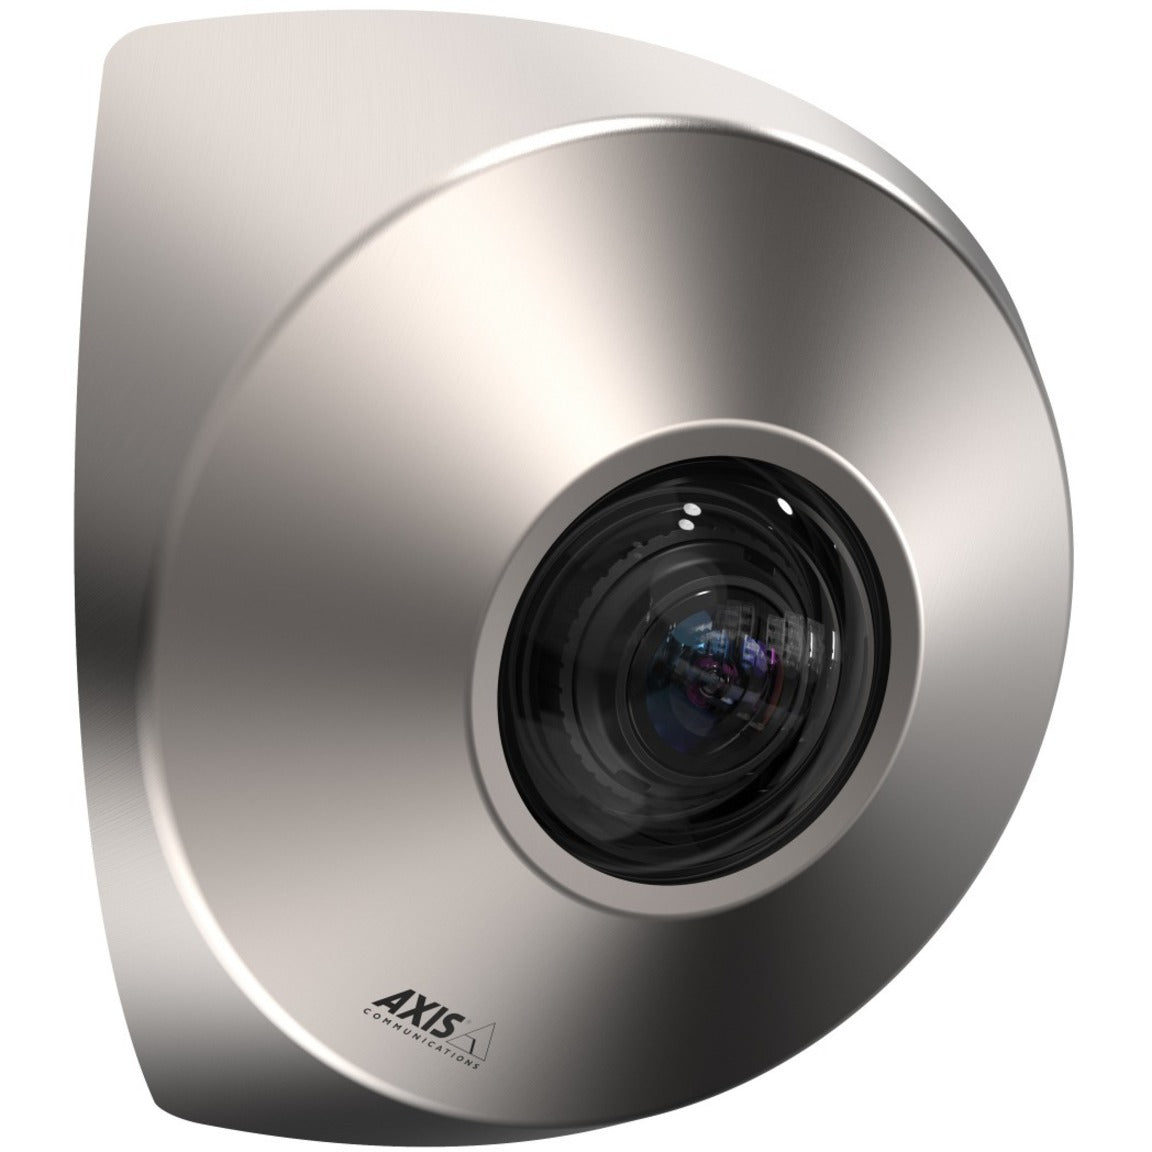 AXIS 01553-001 P9106-V Network Camera Brushed Steel, 3 Megapixel, Indoor/Outdoor, PTZ, Motion Detection